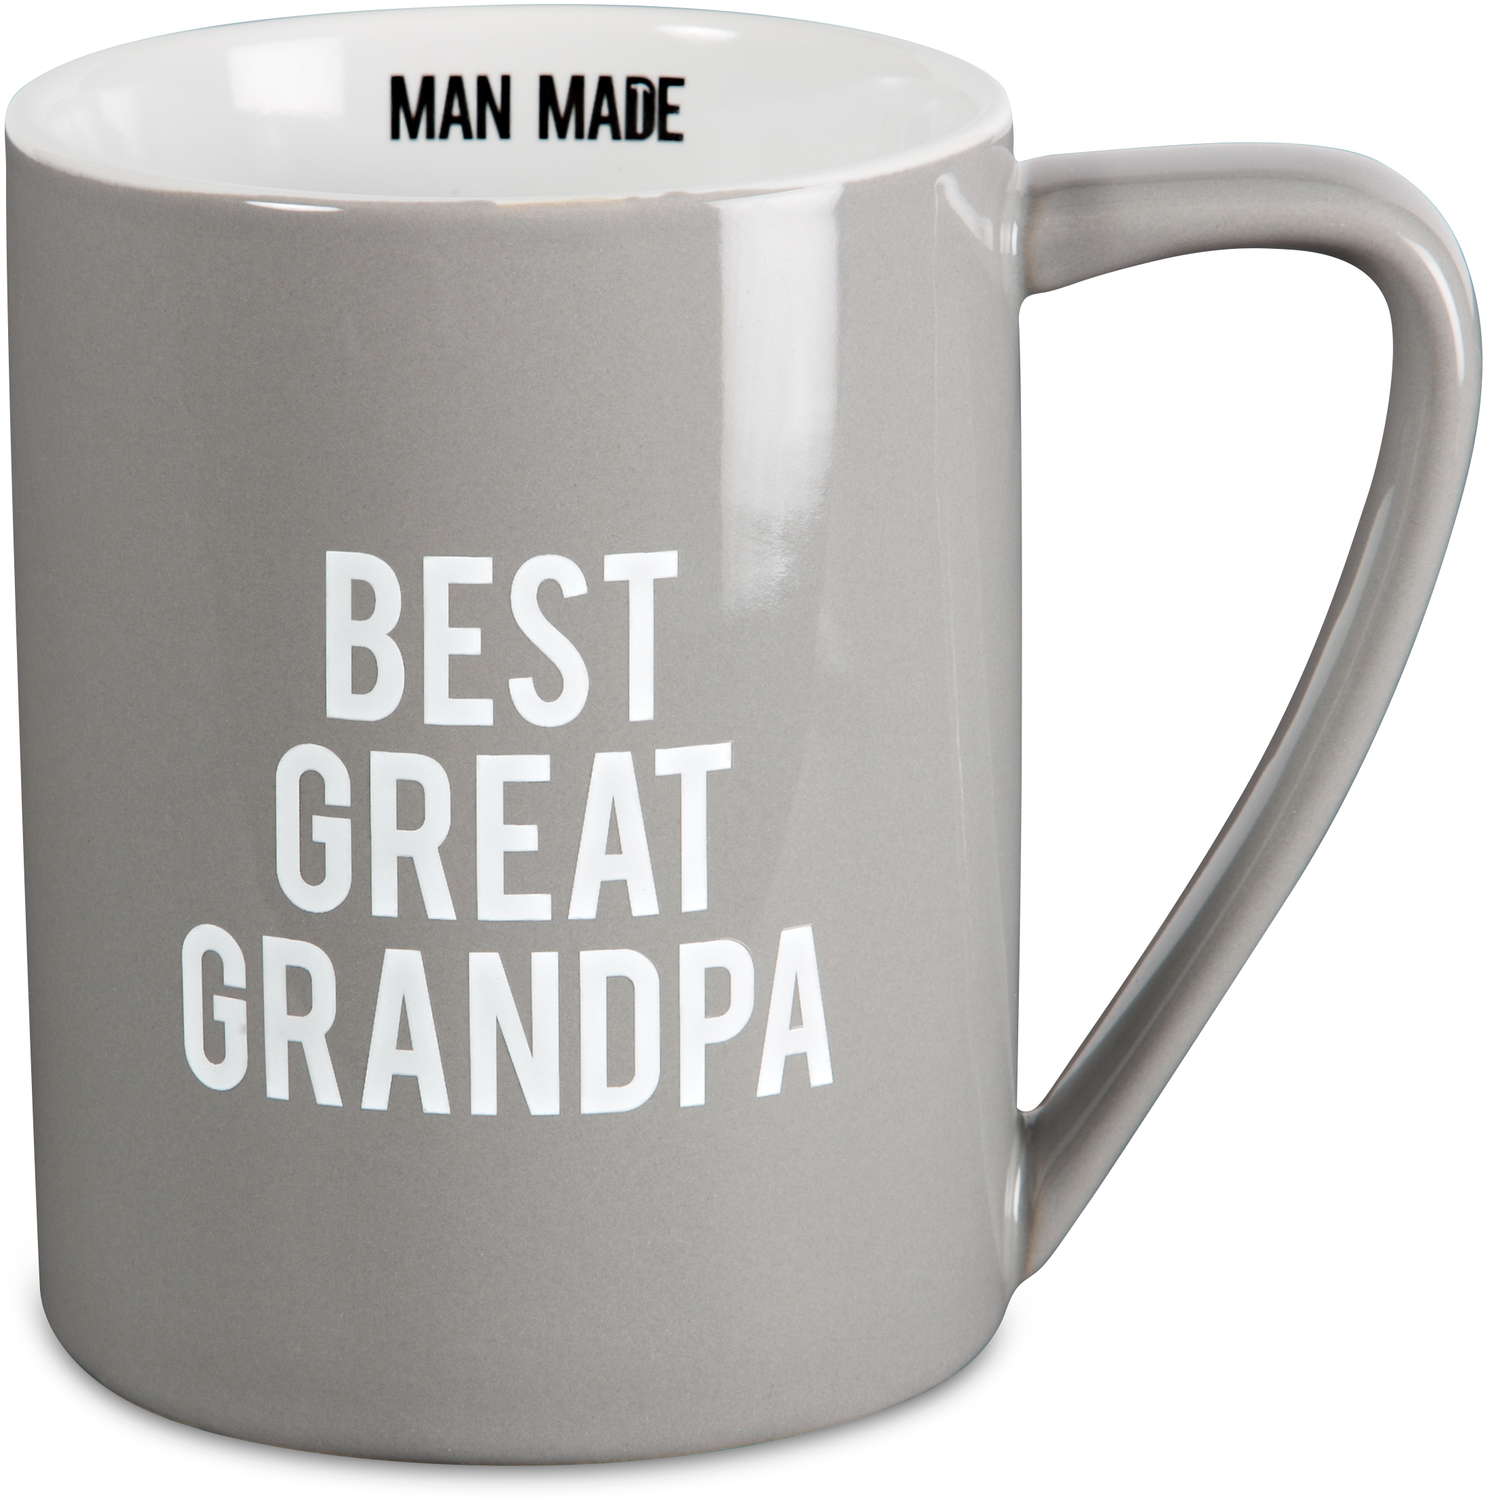 Great Grandpa by Man Made - Great Grandpa - 18 oz. Mug